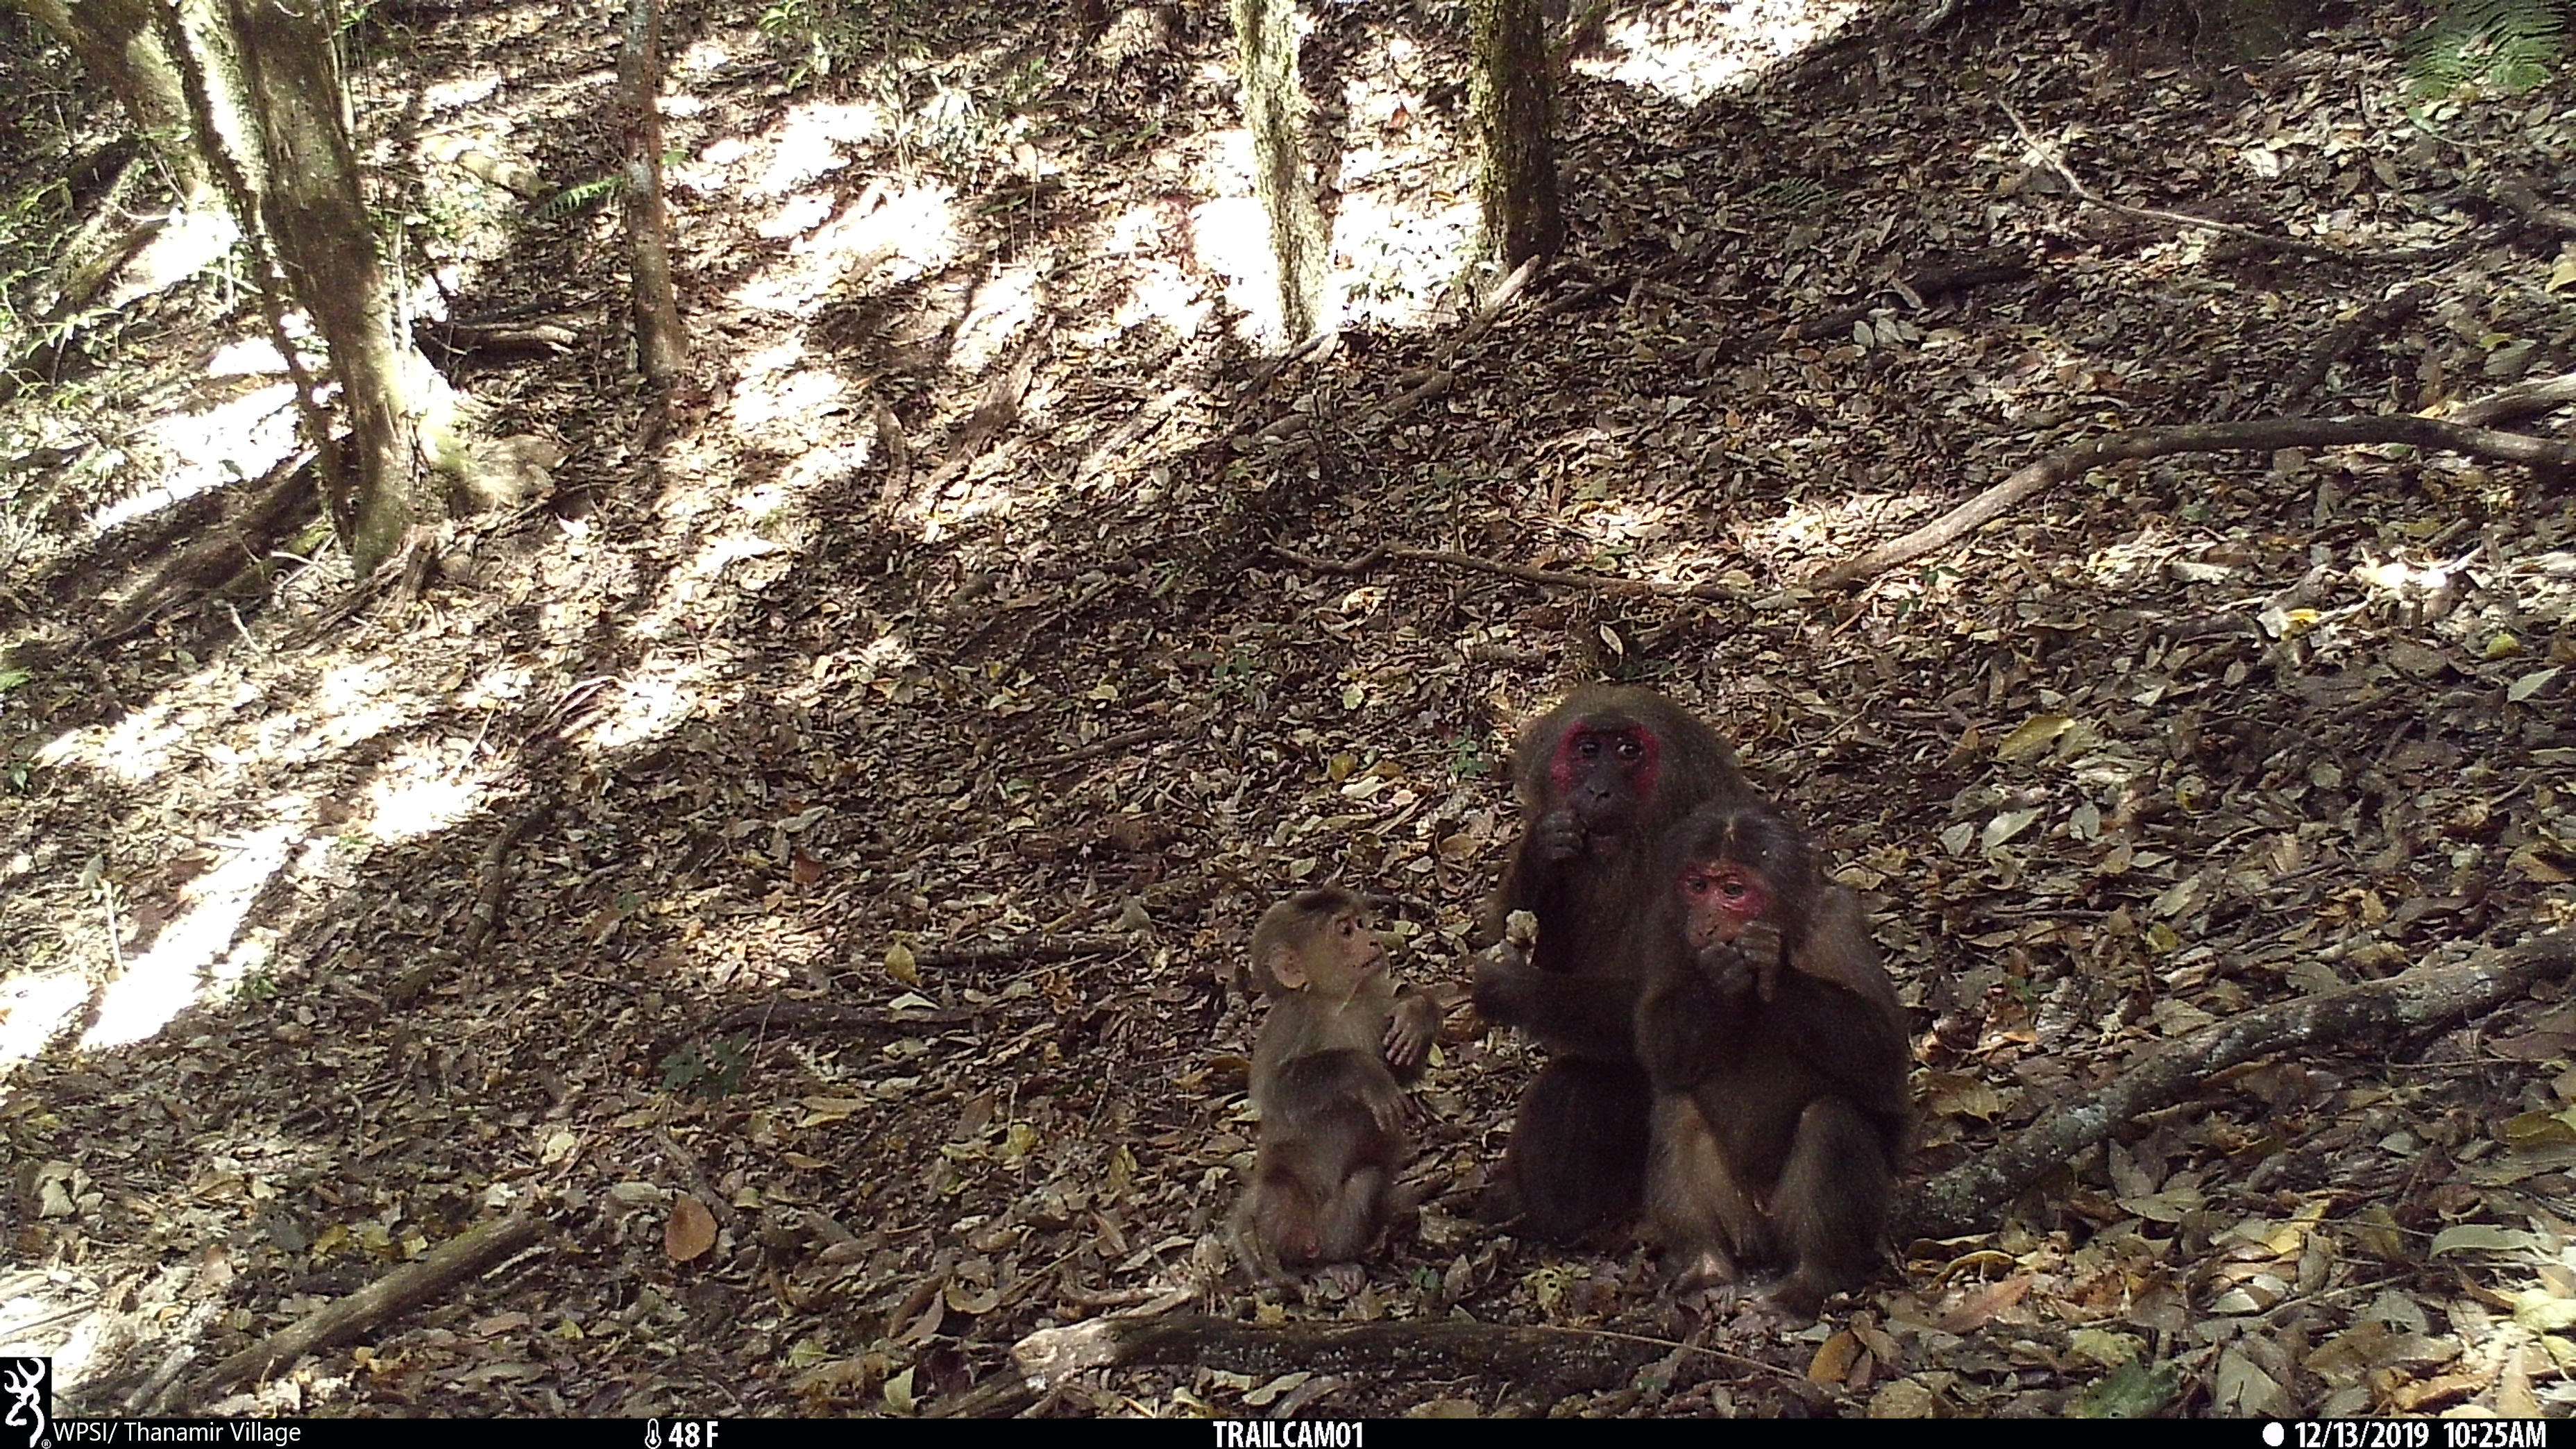 Stump-tailed macaques, WPSI / Thanamir village